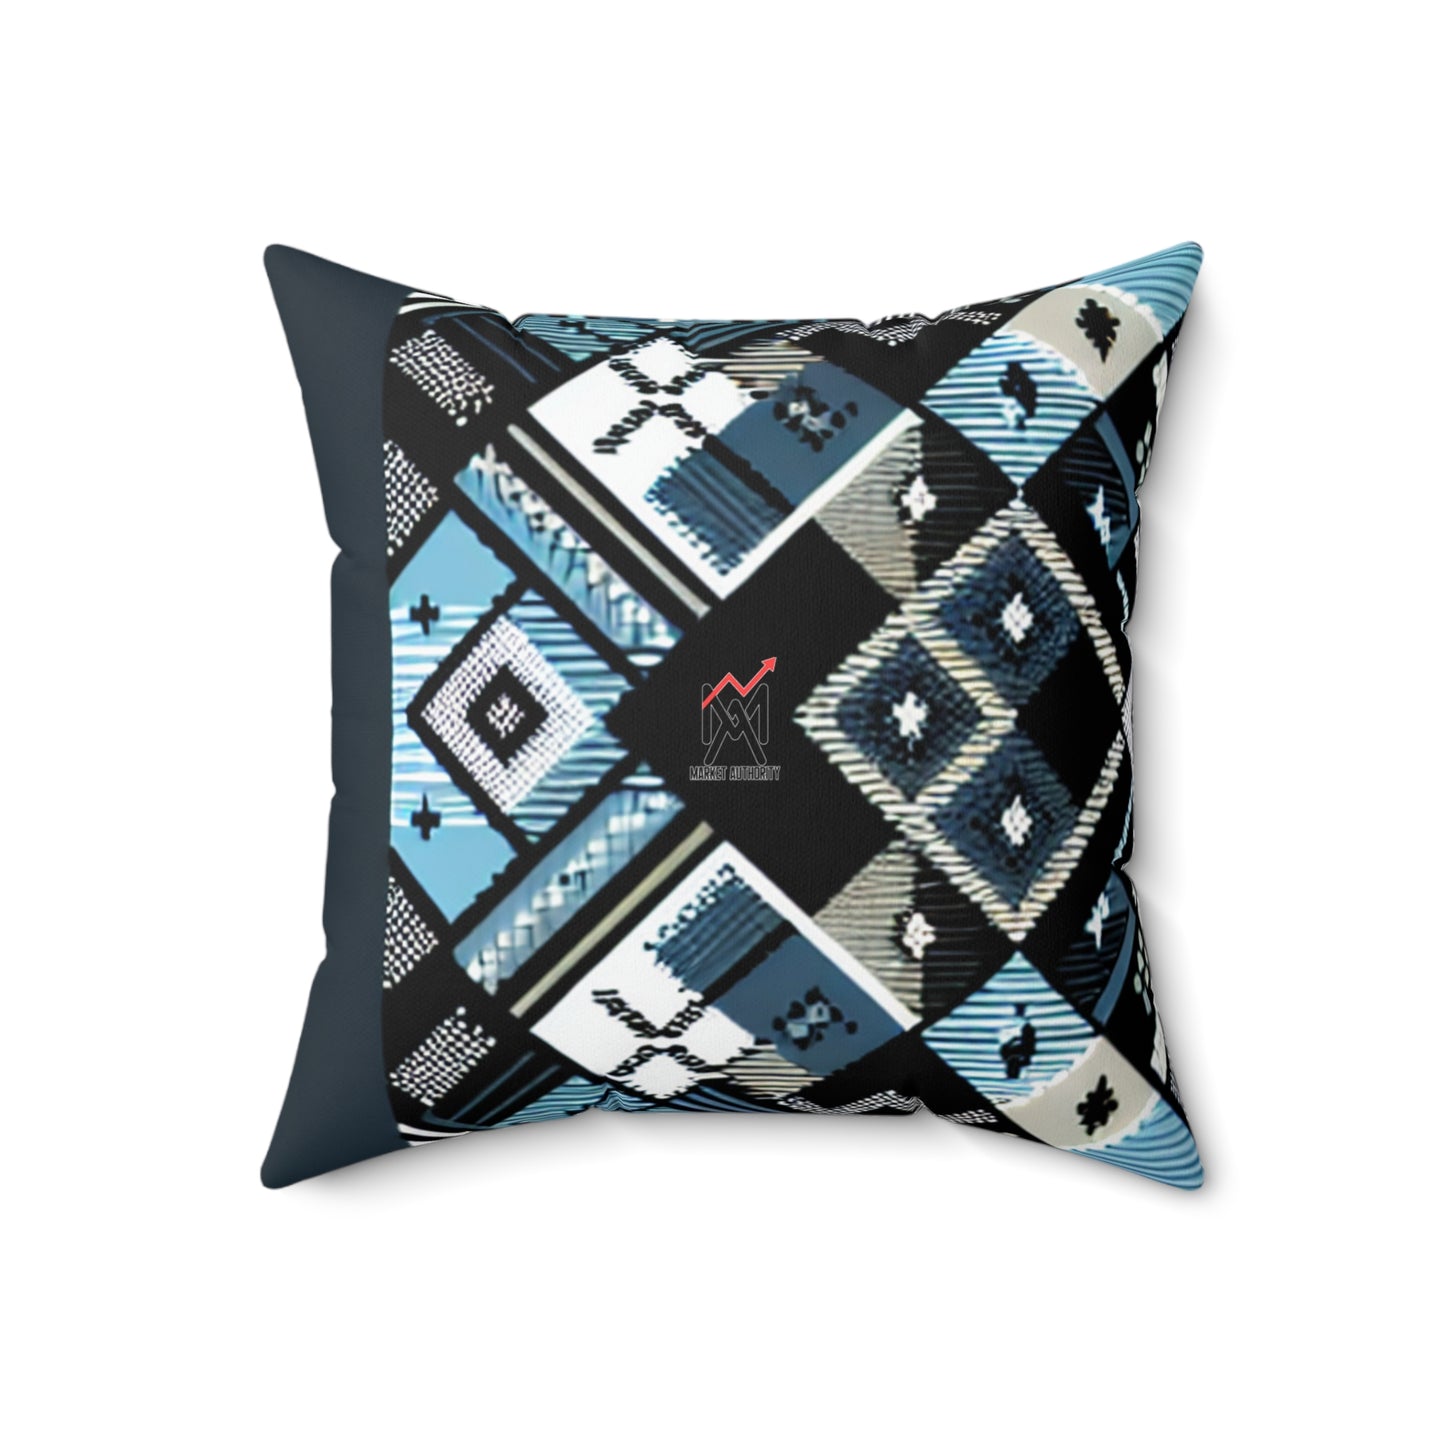 Aztec-Inspired Geometric Pillow